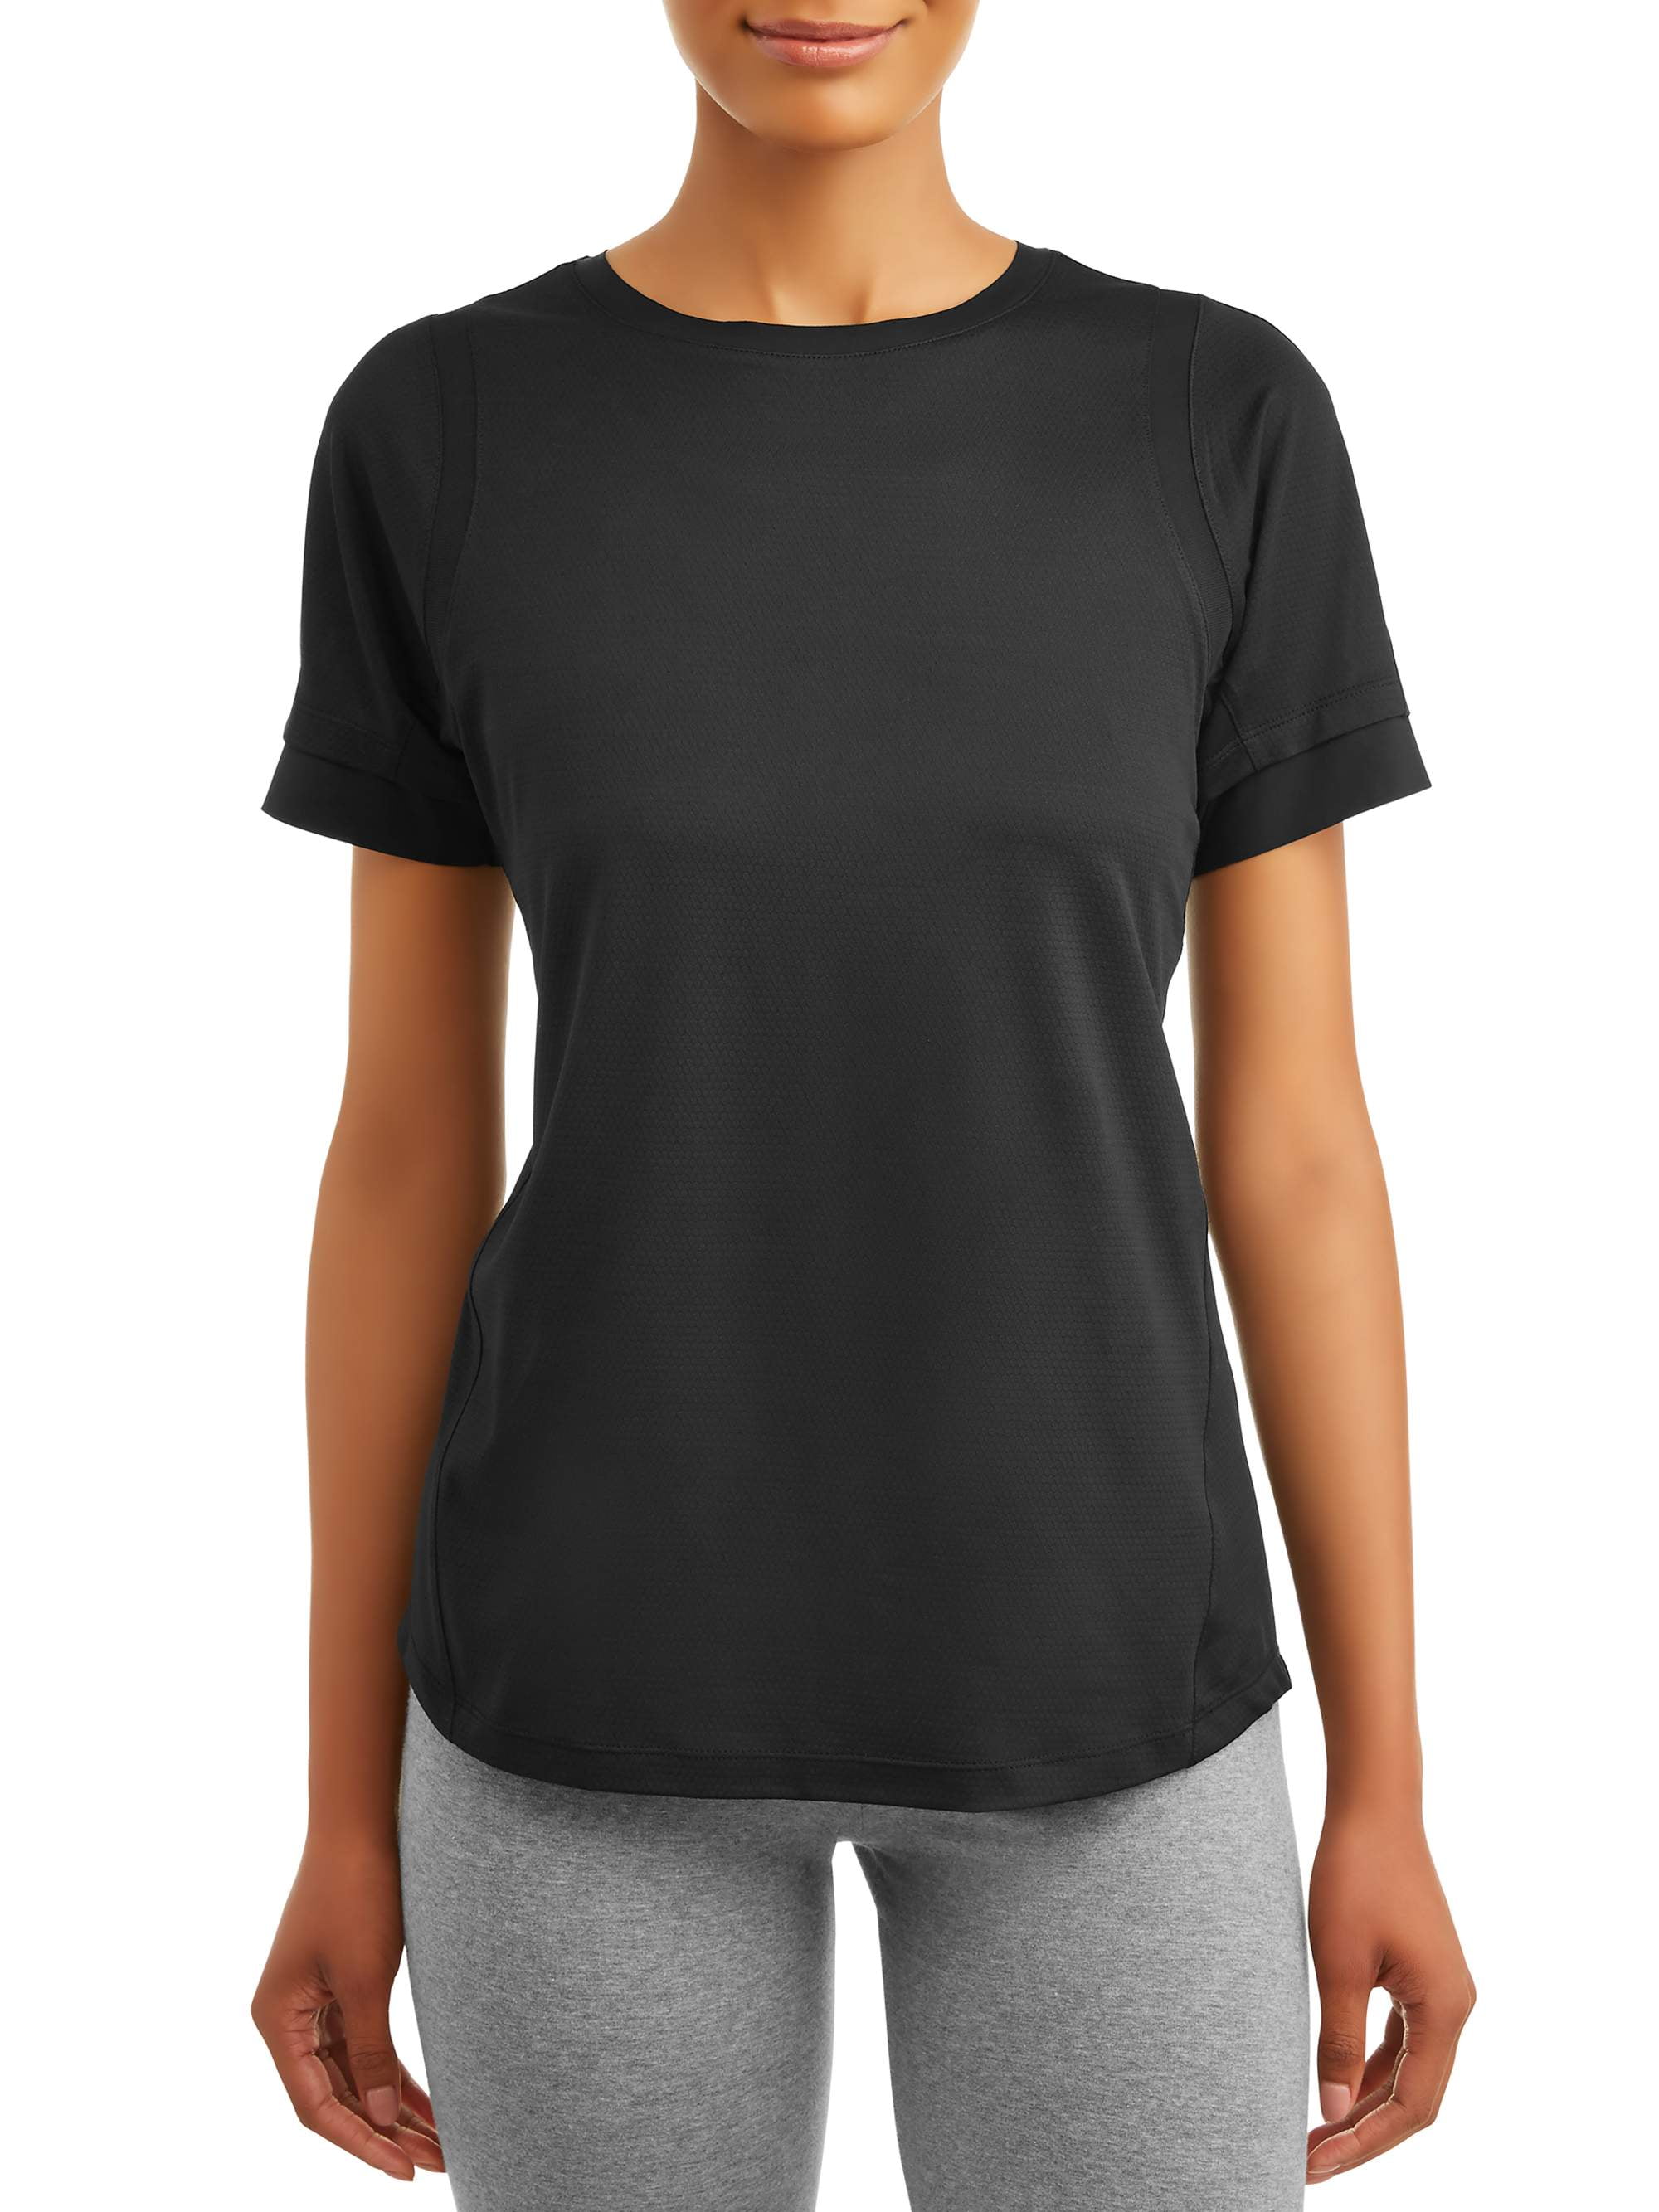 avia women's workout shirts